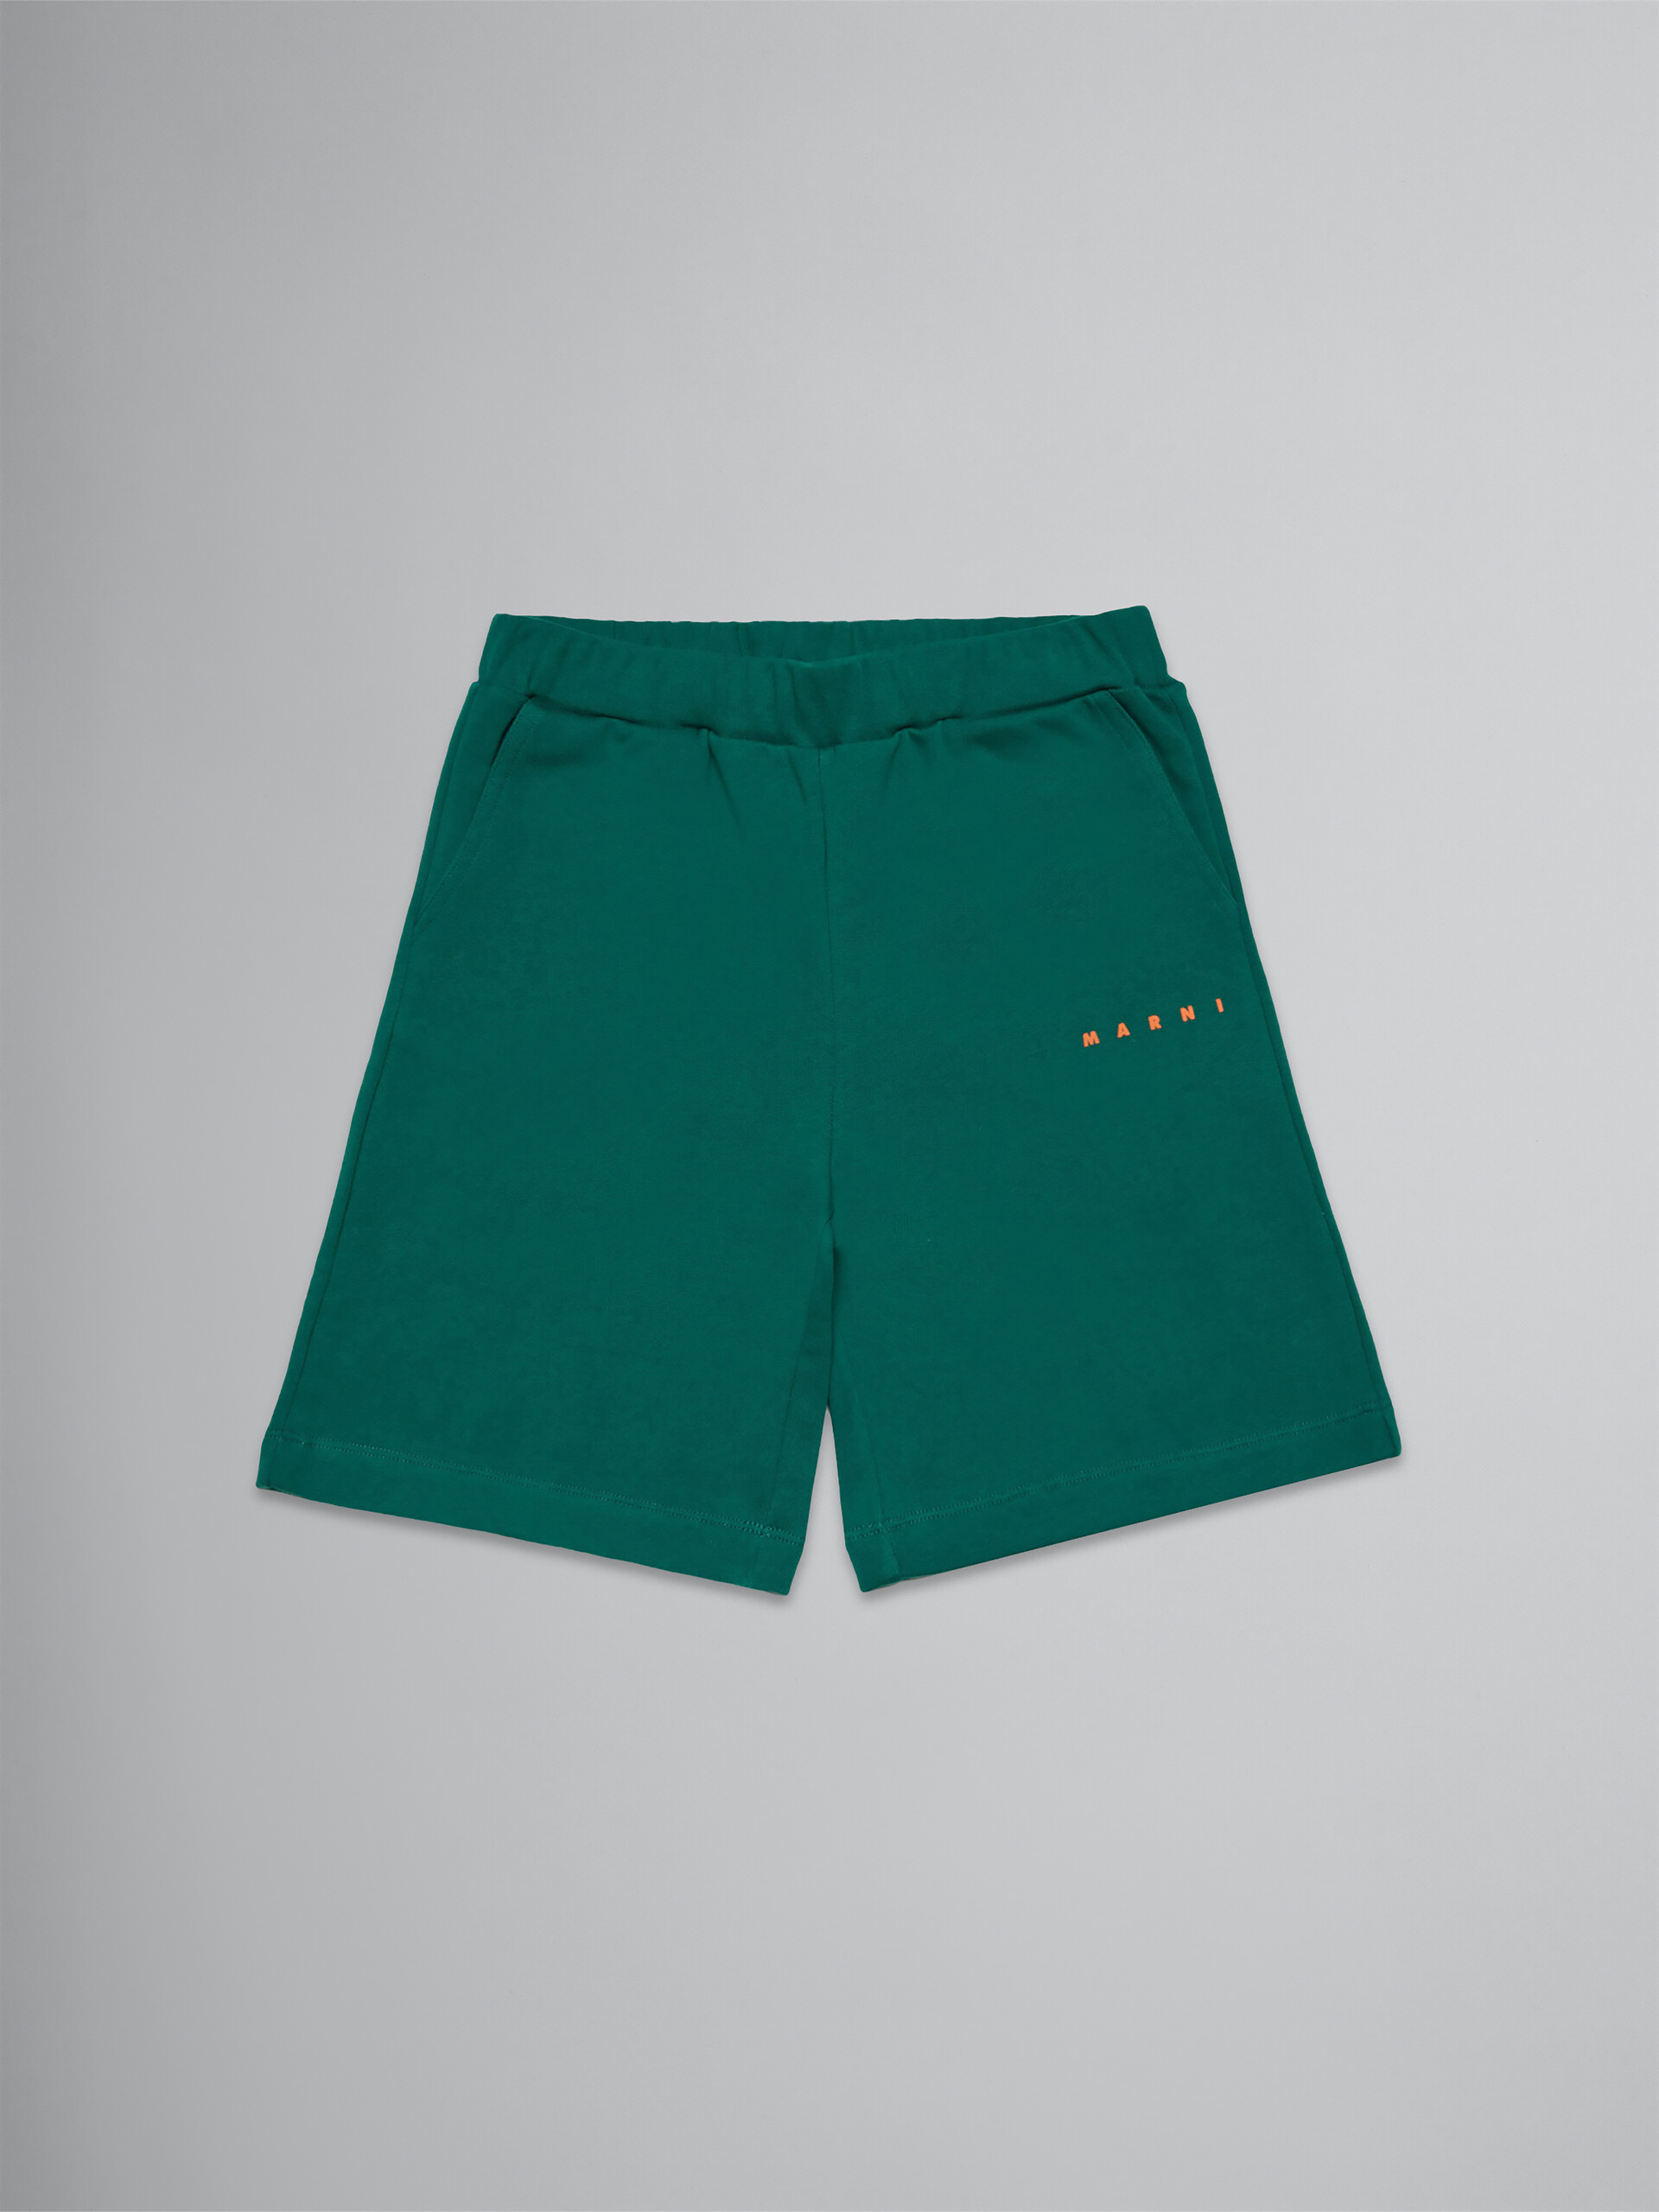 Shorts verdi in felpa con logo - Pantaloni - Image 1